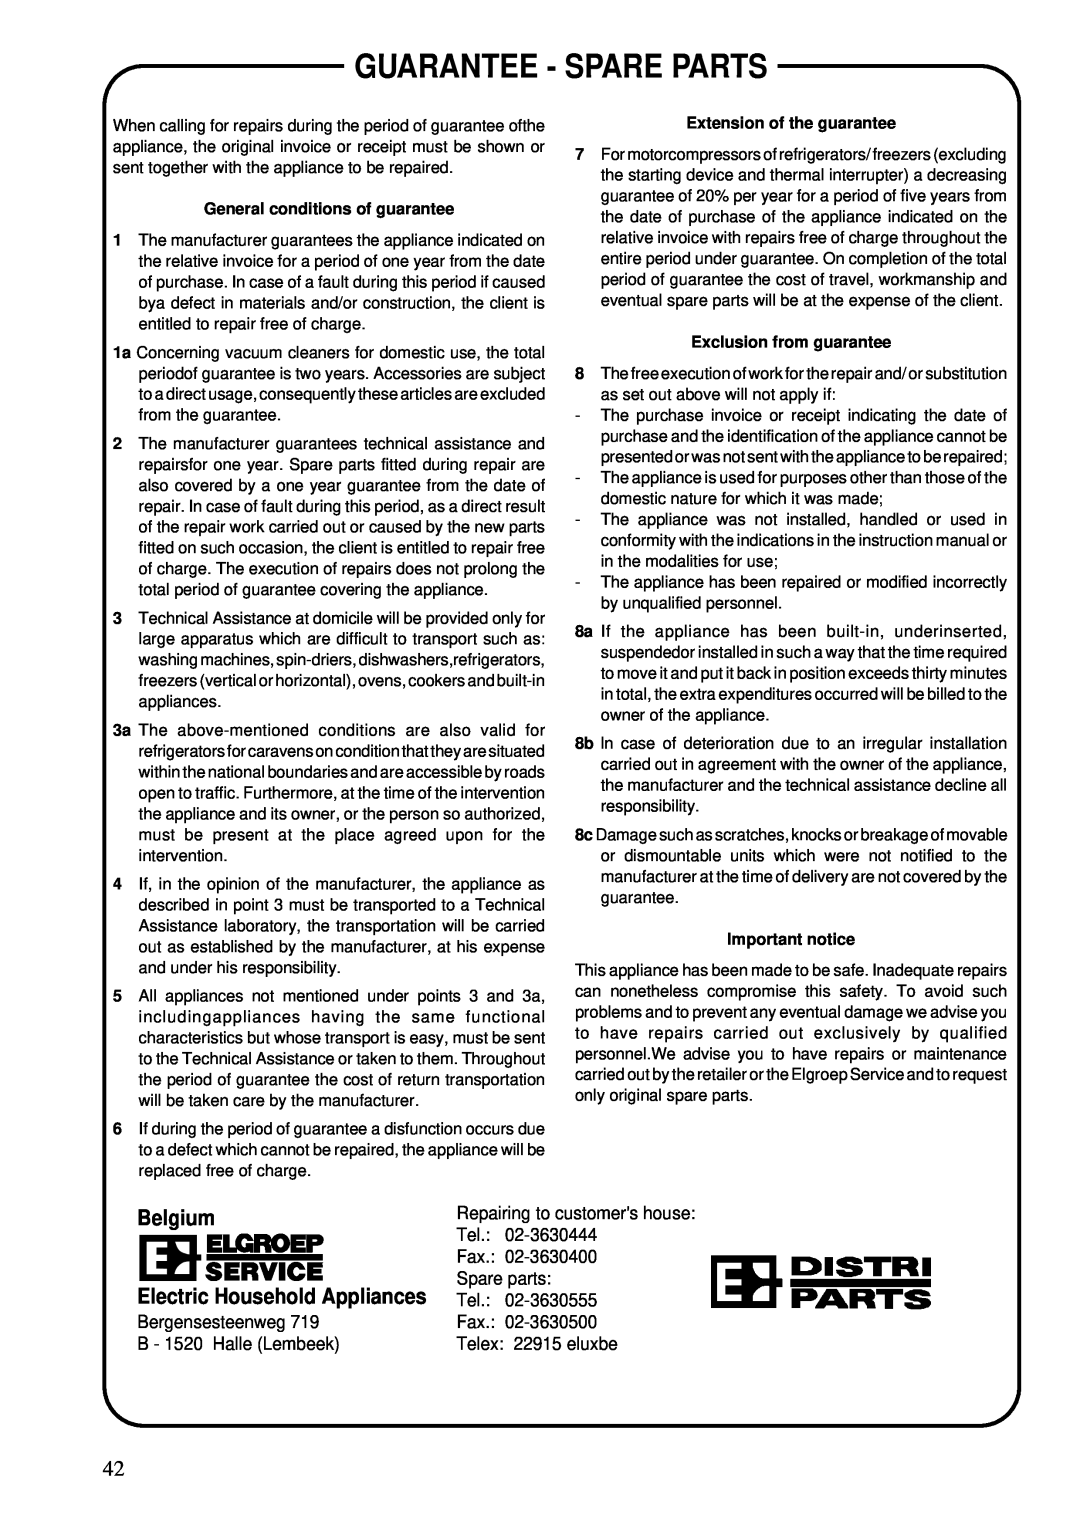 Zanussi ZGF 643 manual Guarantee - Spare Parts, Belgium, Electric Household Appliances 